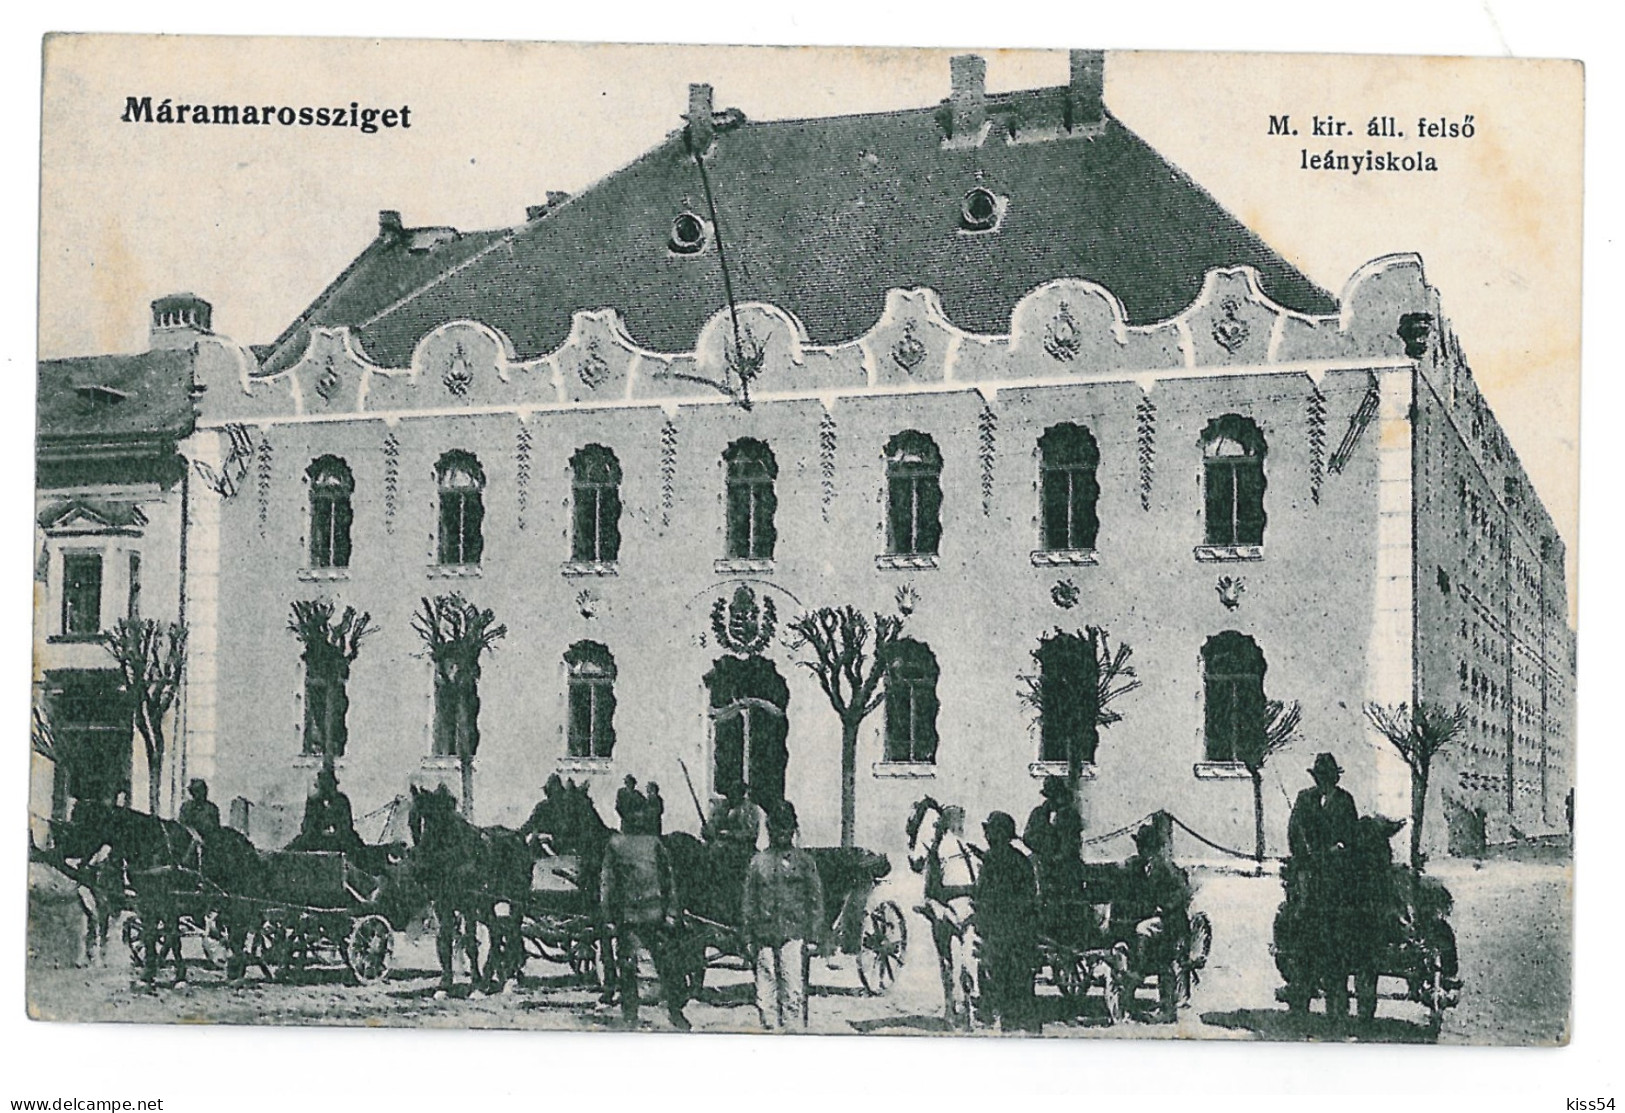 RO 38 - 11052 SIGHET, Maramures, Market, Carriages, Romania - Old Postcard, CENSOR - Used - Romania